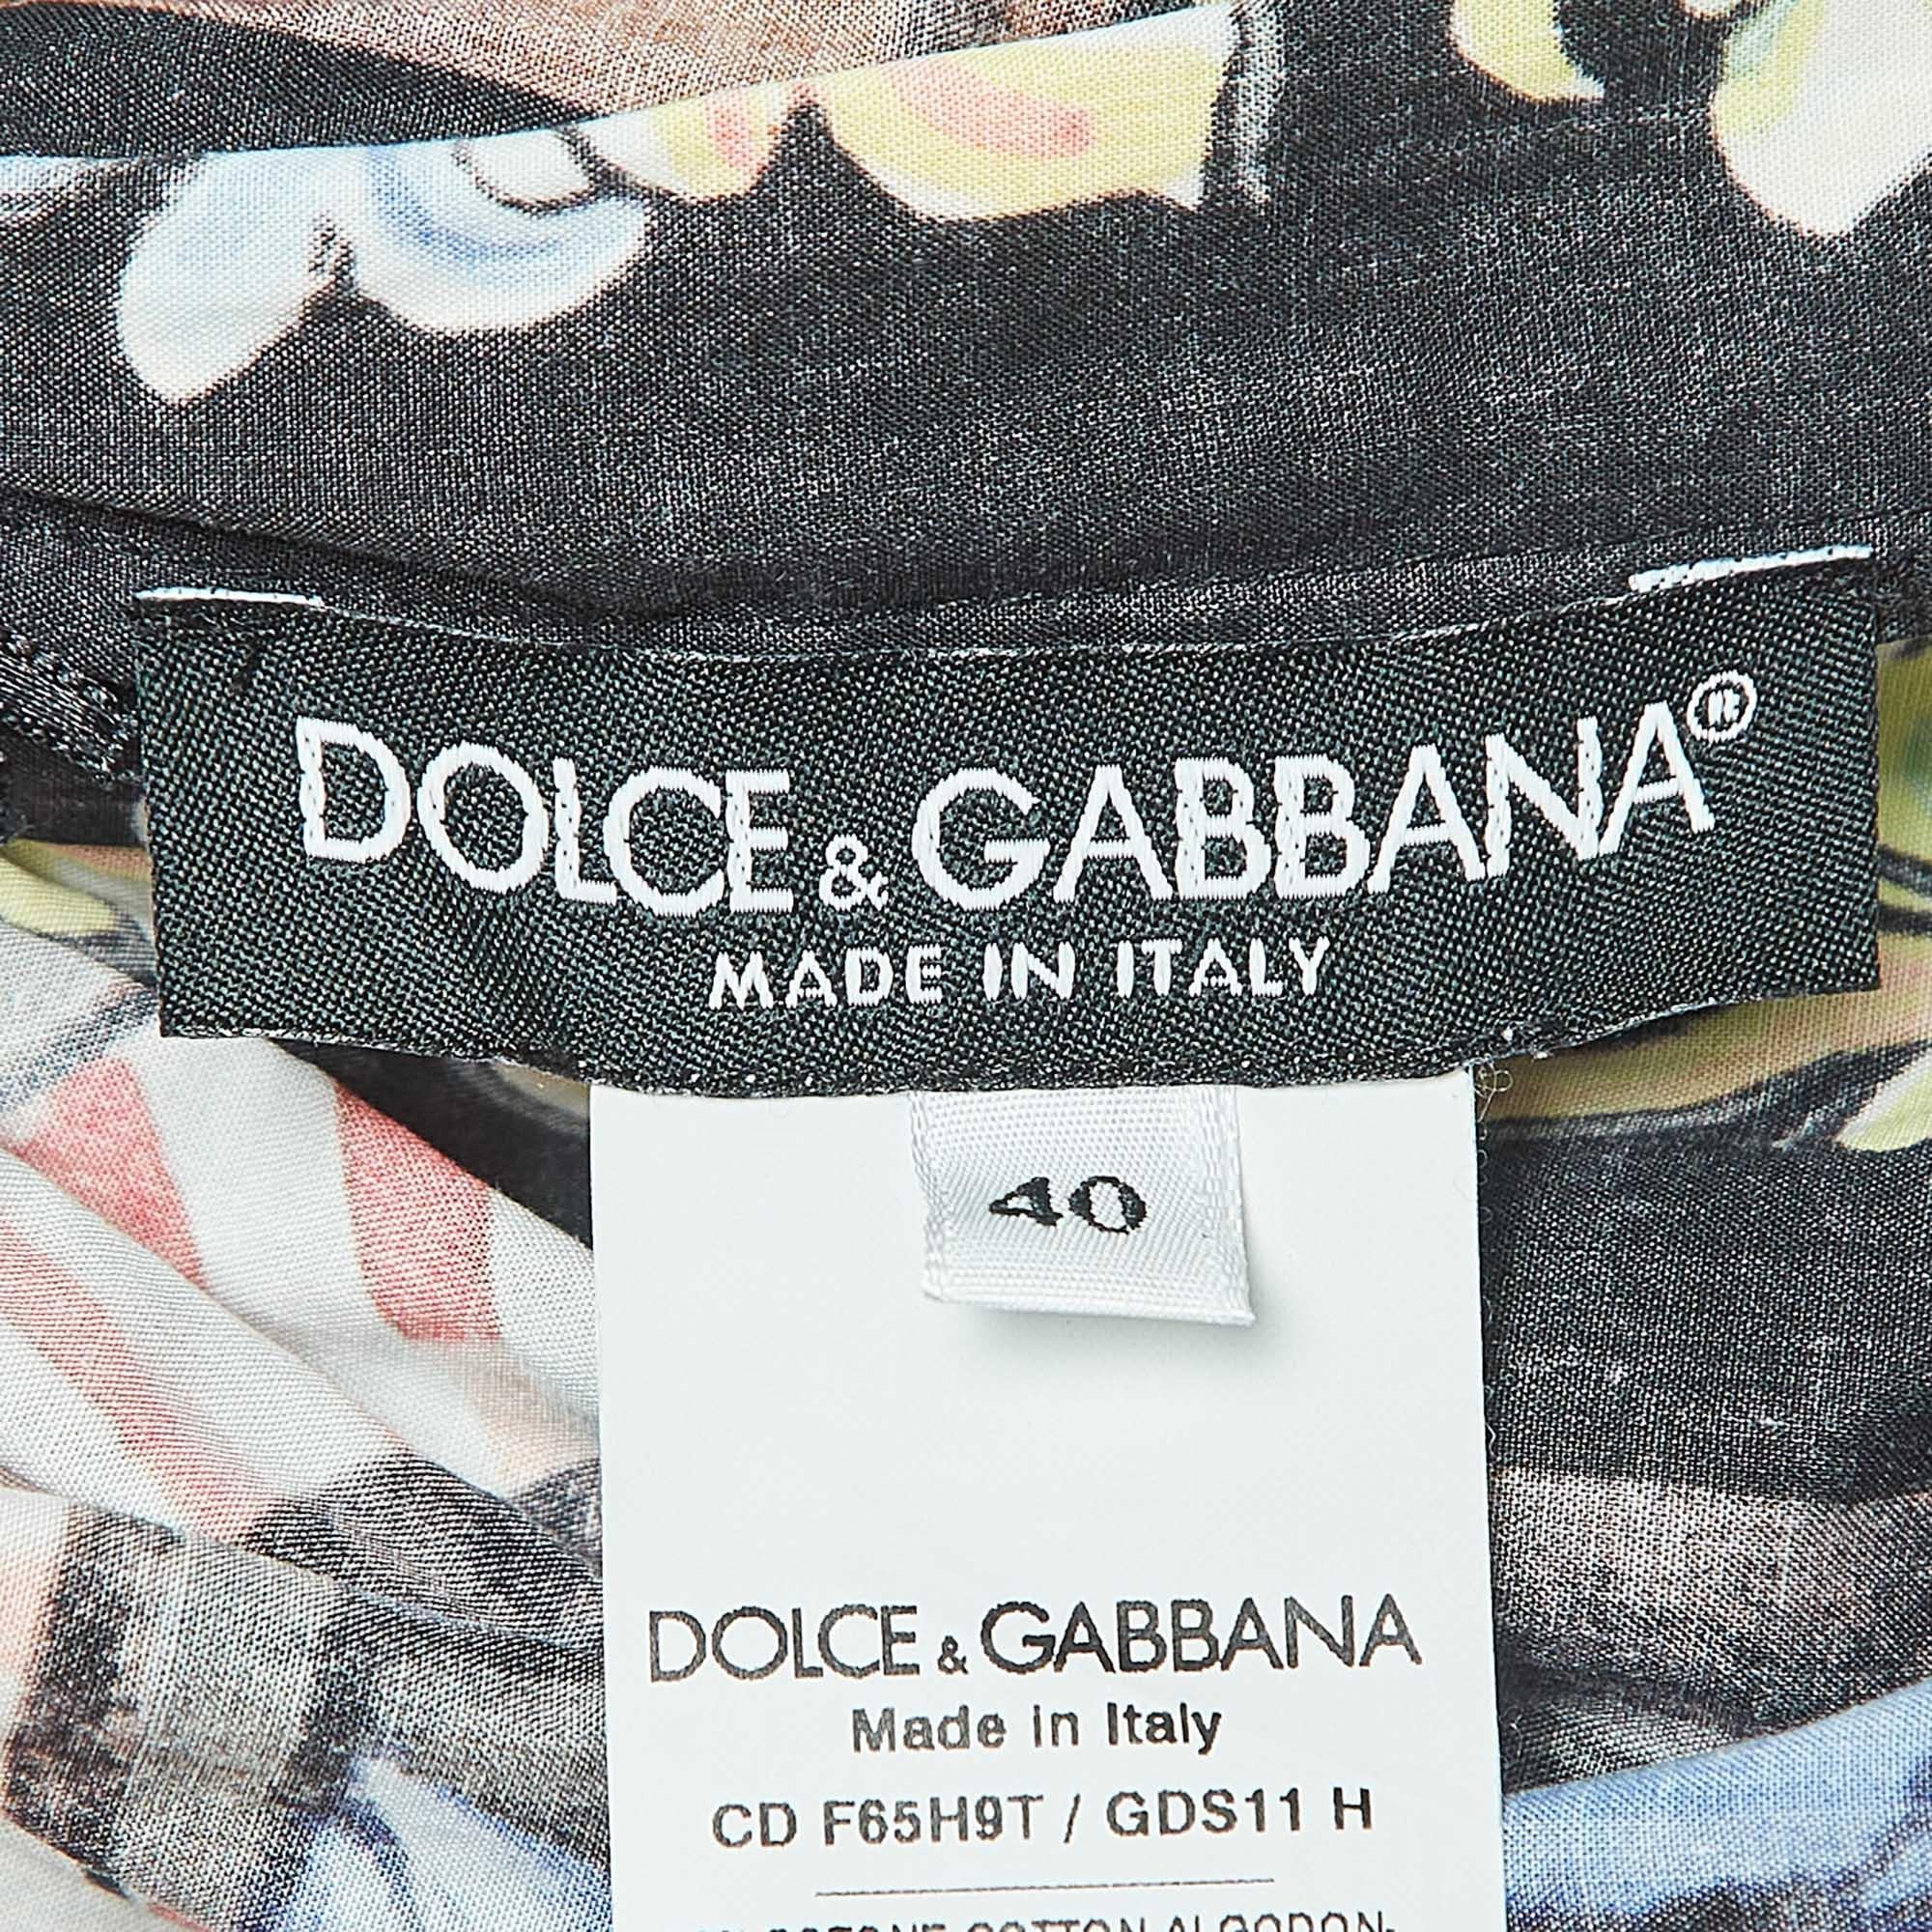 Dolce & Gabbana Multicolor Printed Cotton Poplin Short Dress S For Sale 1